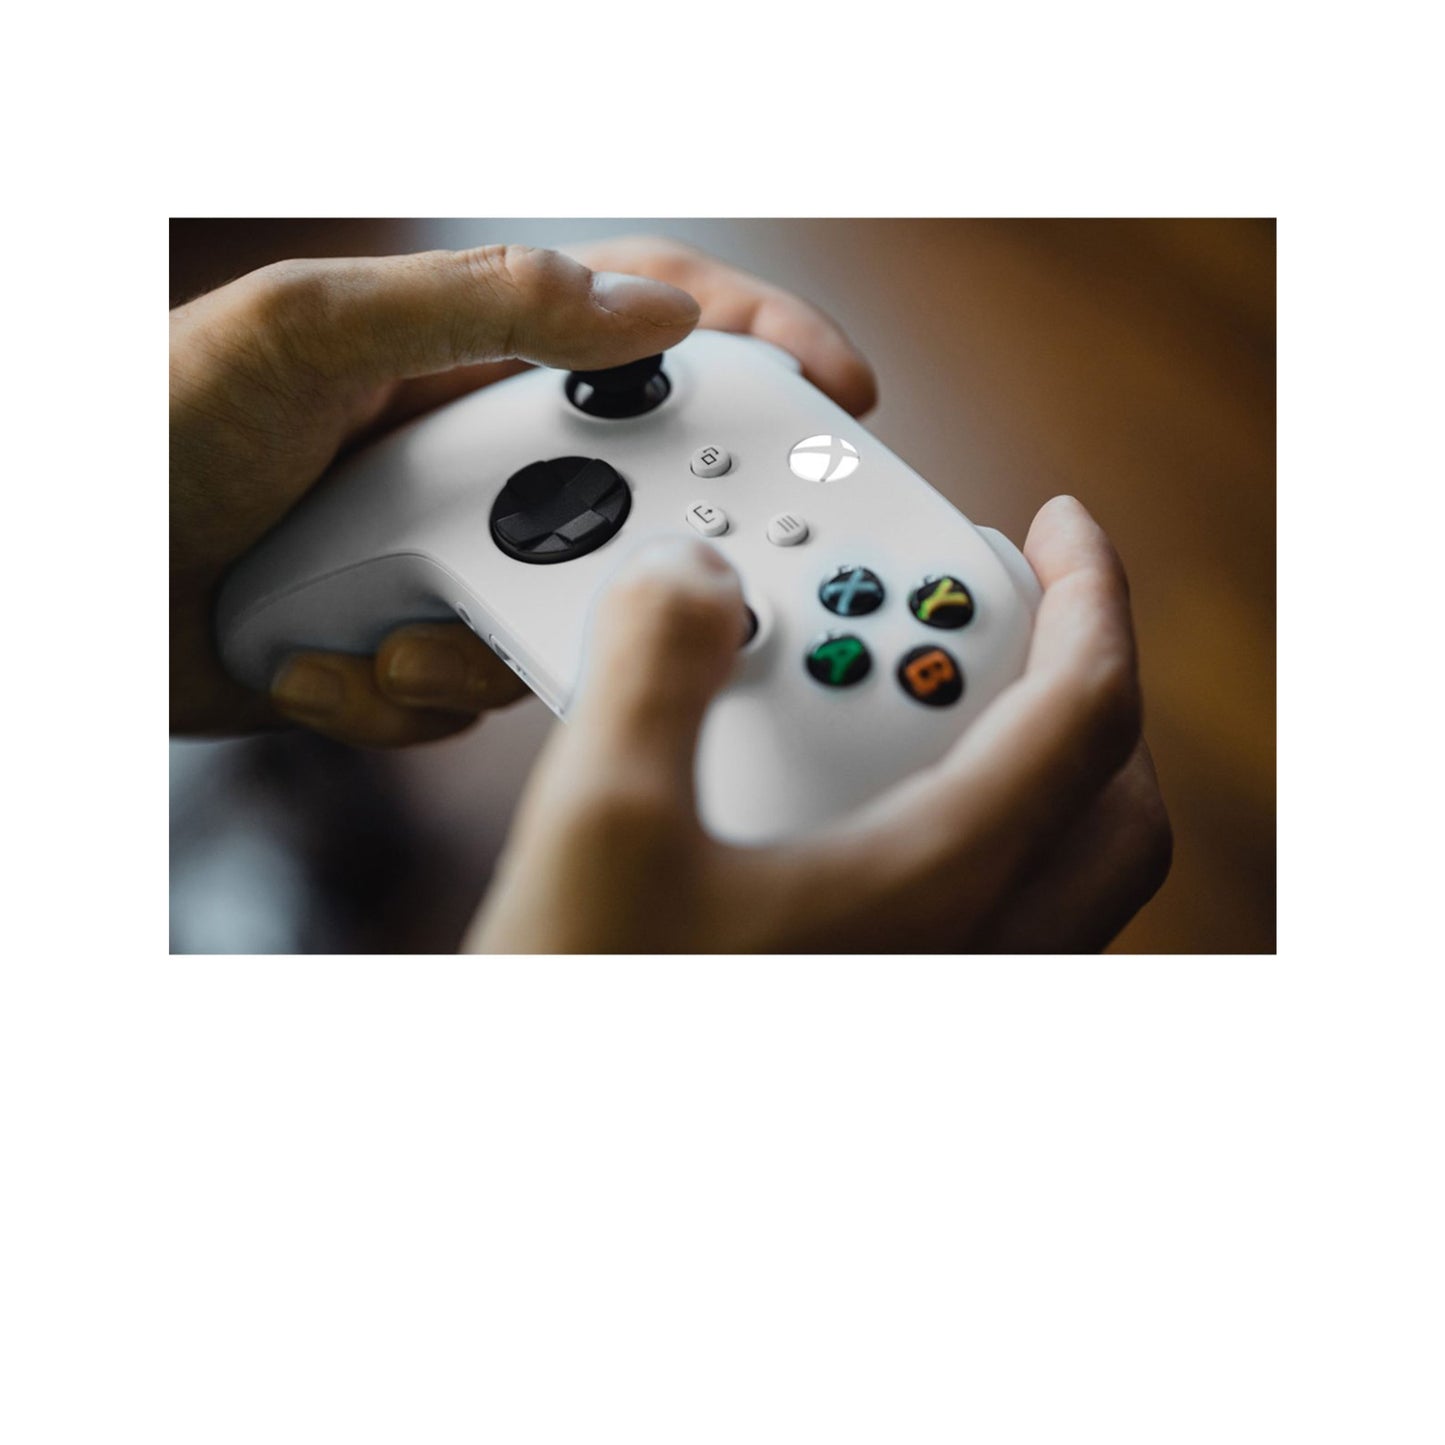 Microsoft - وحدة تحكم Xbox اللاسلكية لأجهزة Xbox Series X وXbox Series S وXbox One وأجهزة Windows - Robot White 